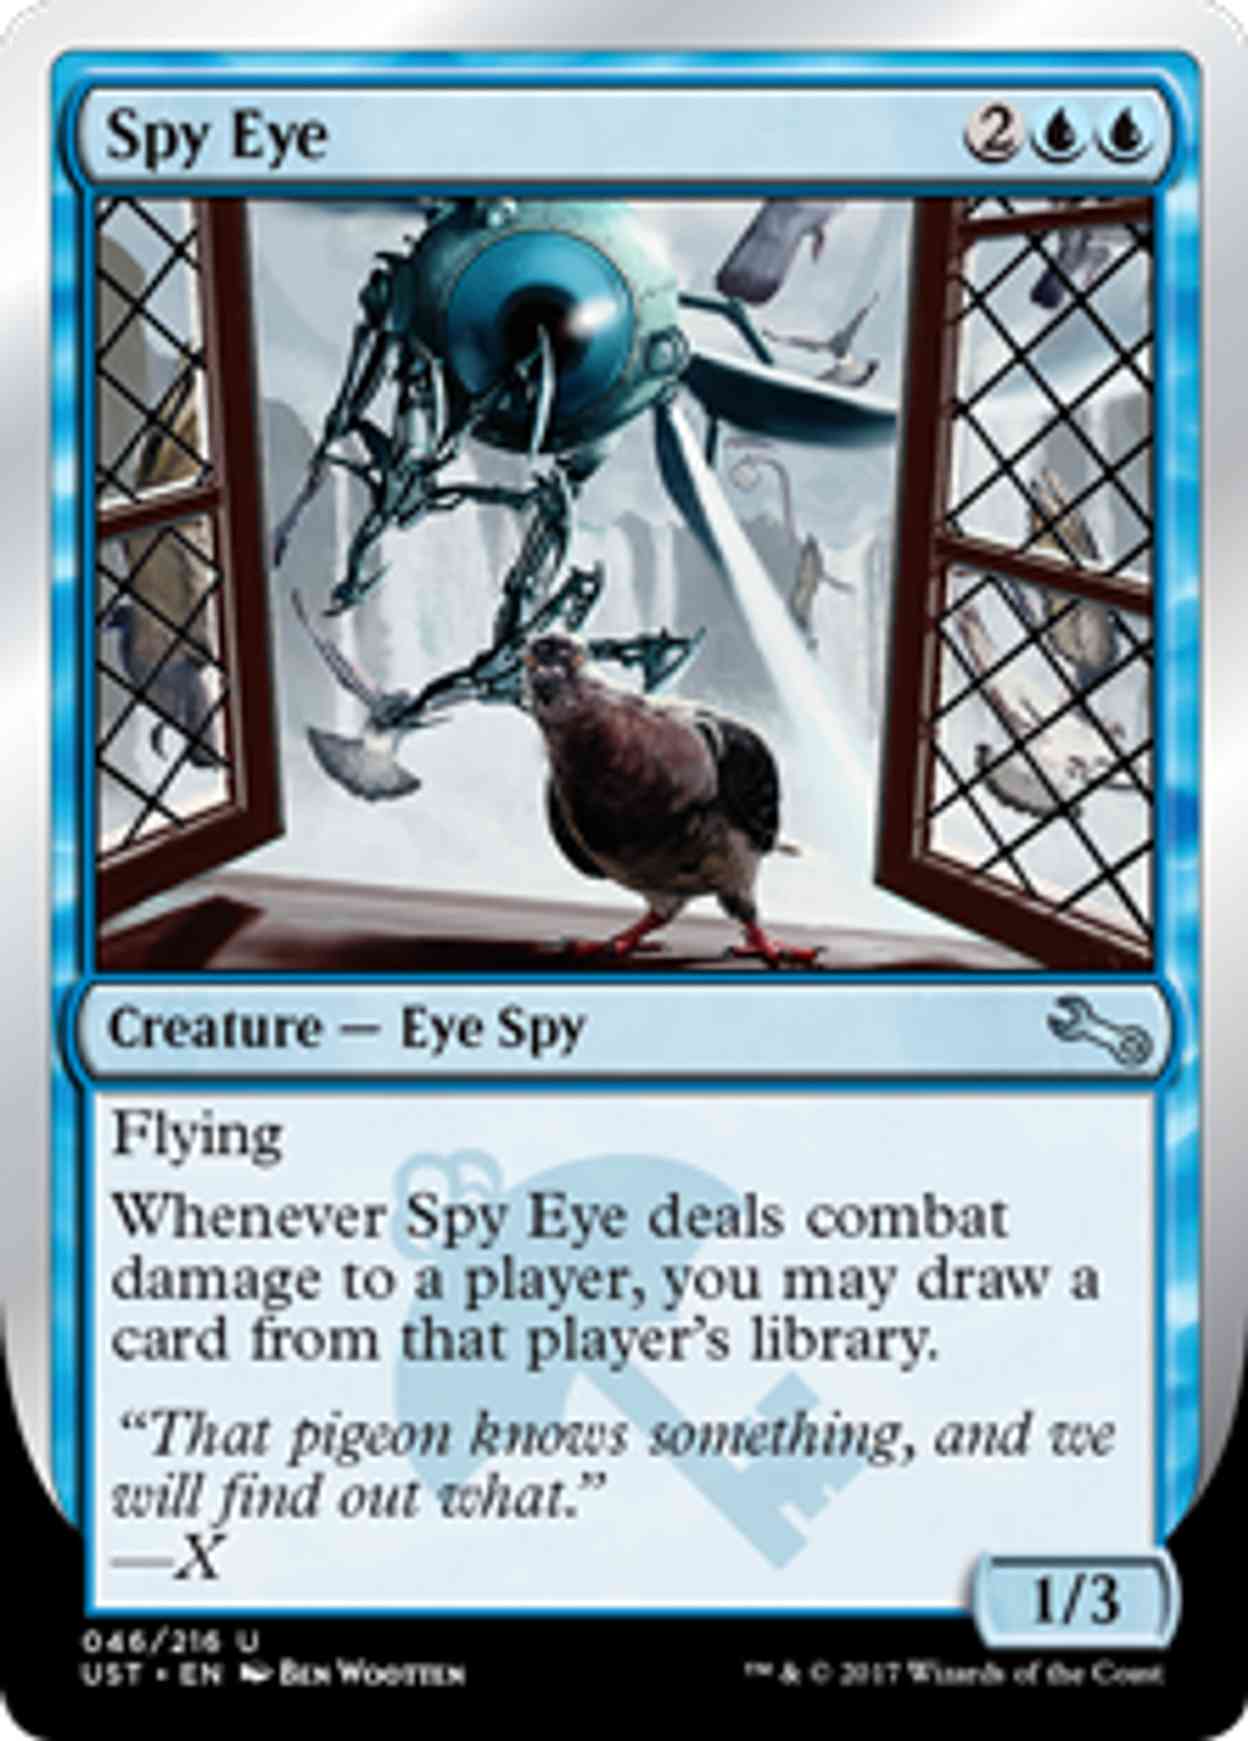 Spy Eye magic card front